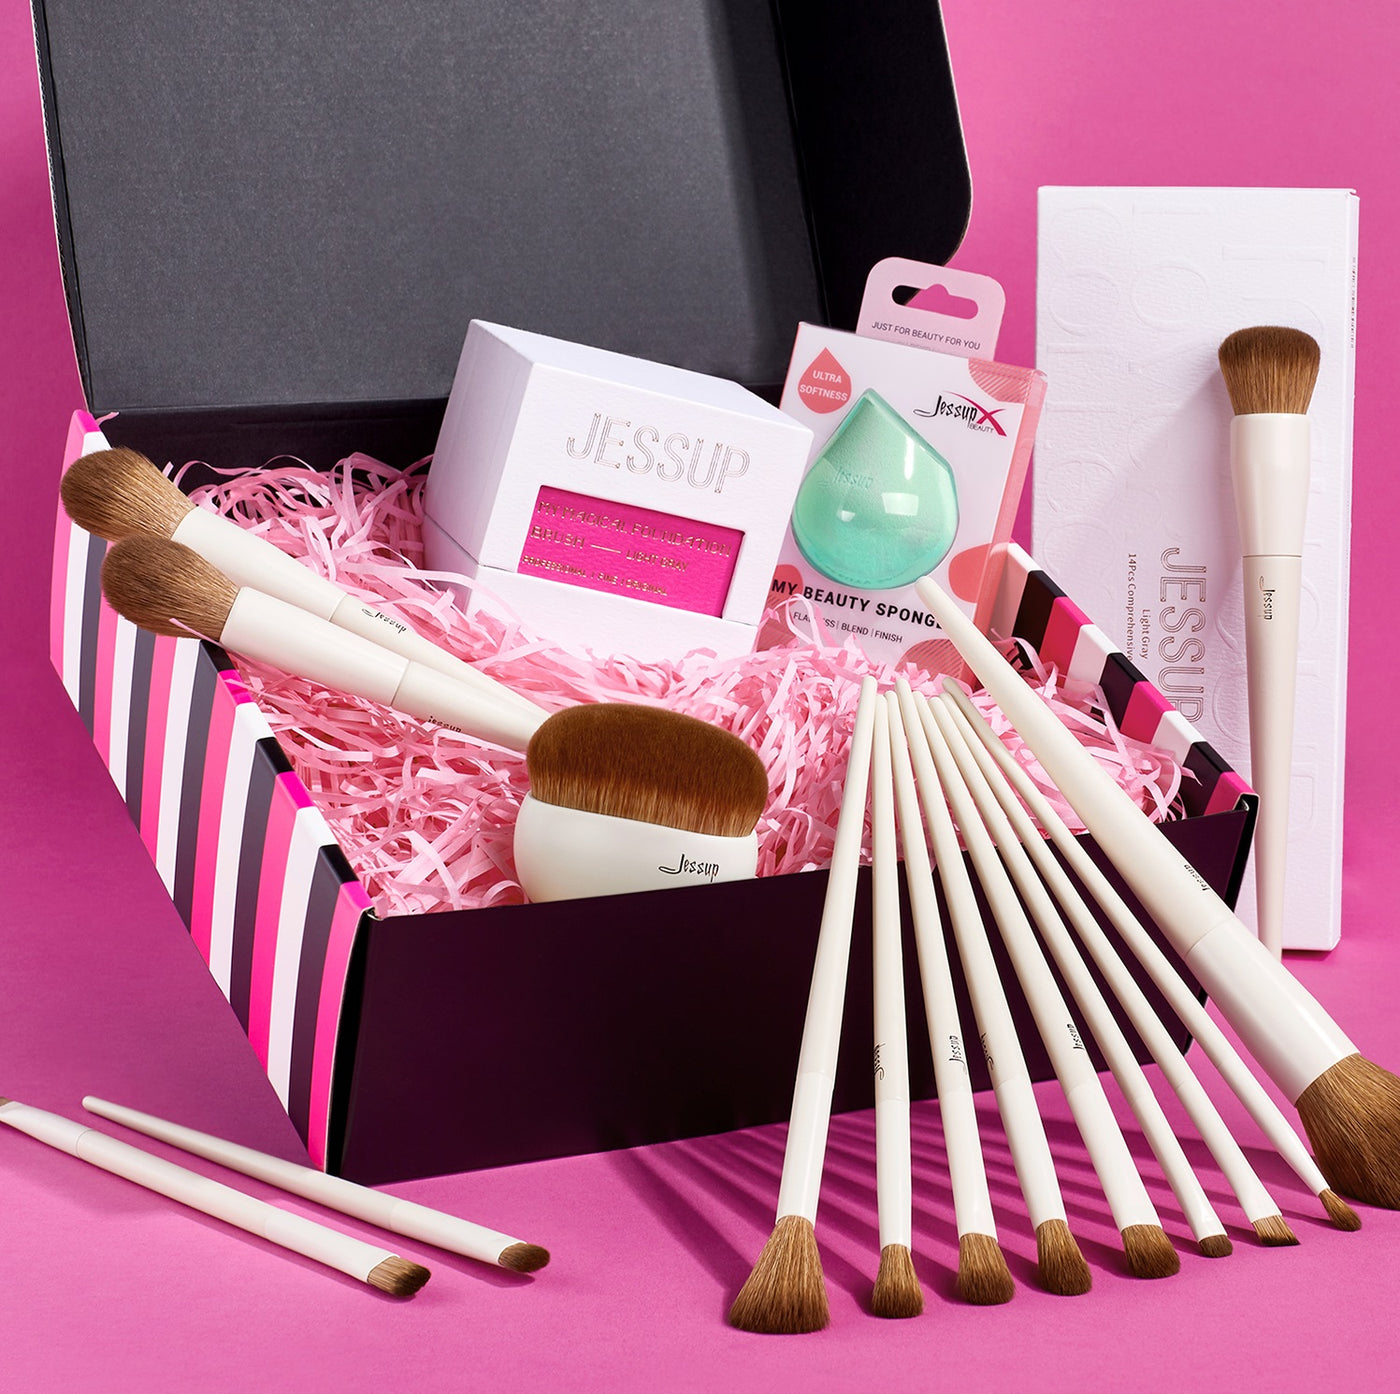 Makeup beauty gift box - Jessup